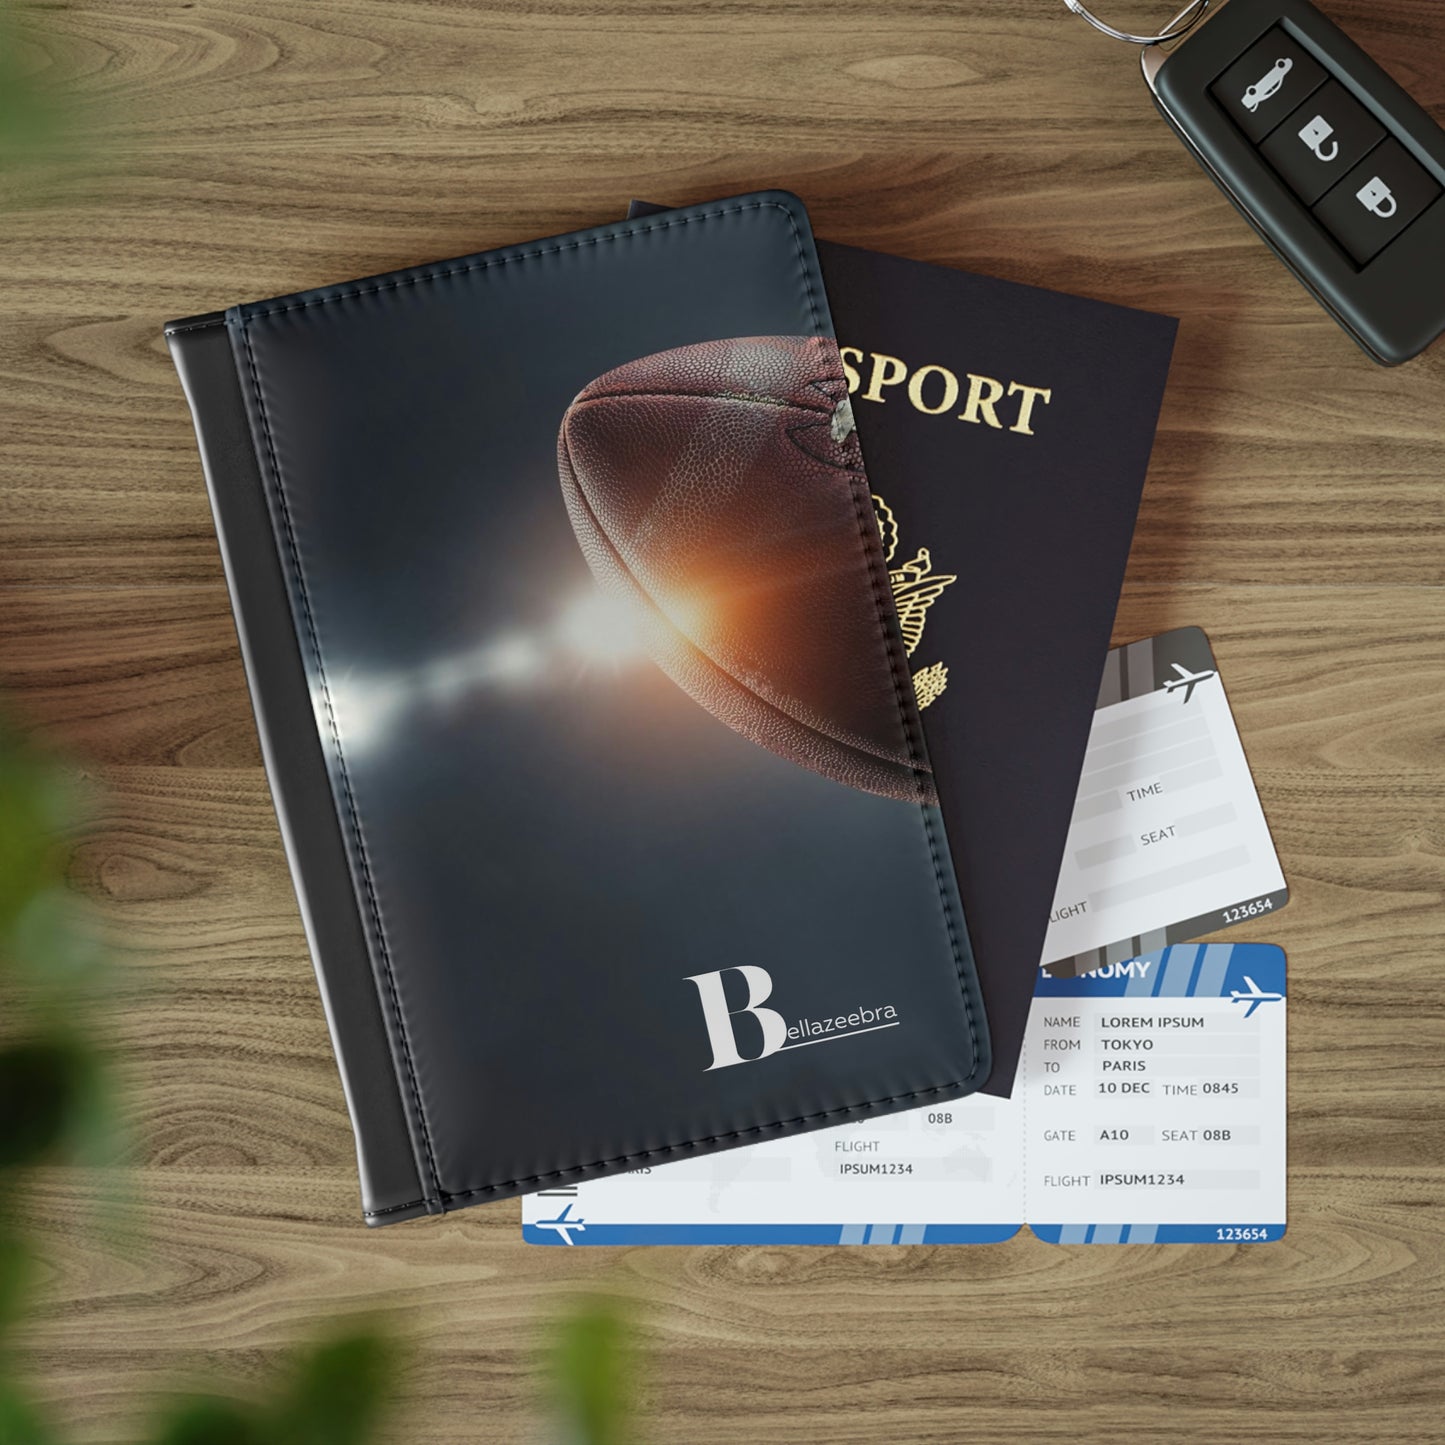 BELLAZEEBRA Passport Cover with football design